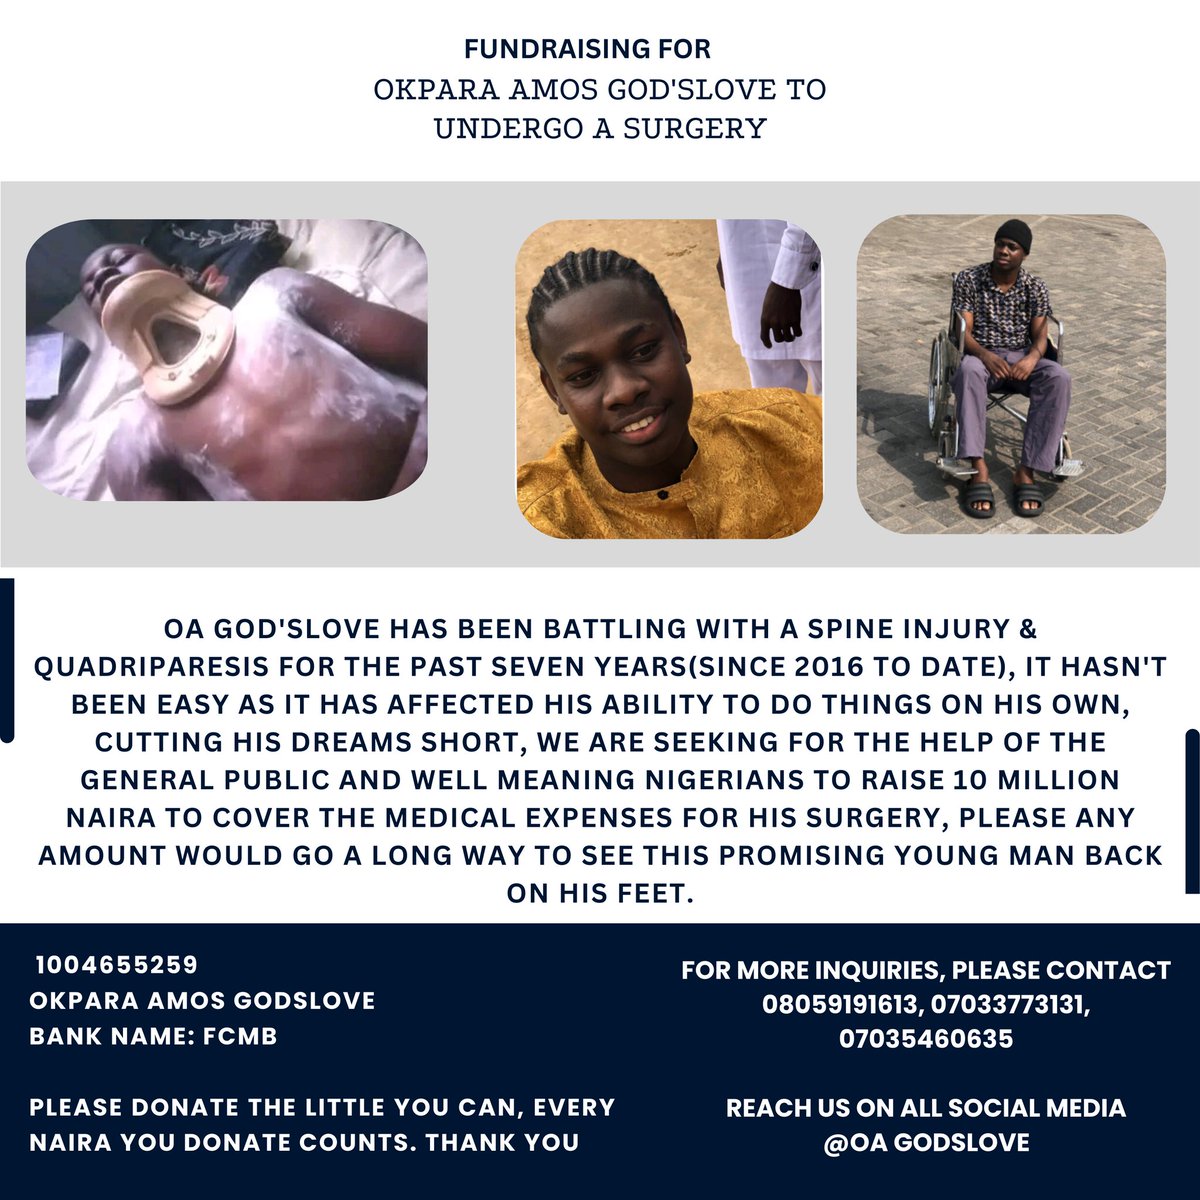 I need help please

1004655259
Fcmb
Okpara Amos God'slove